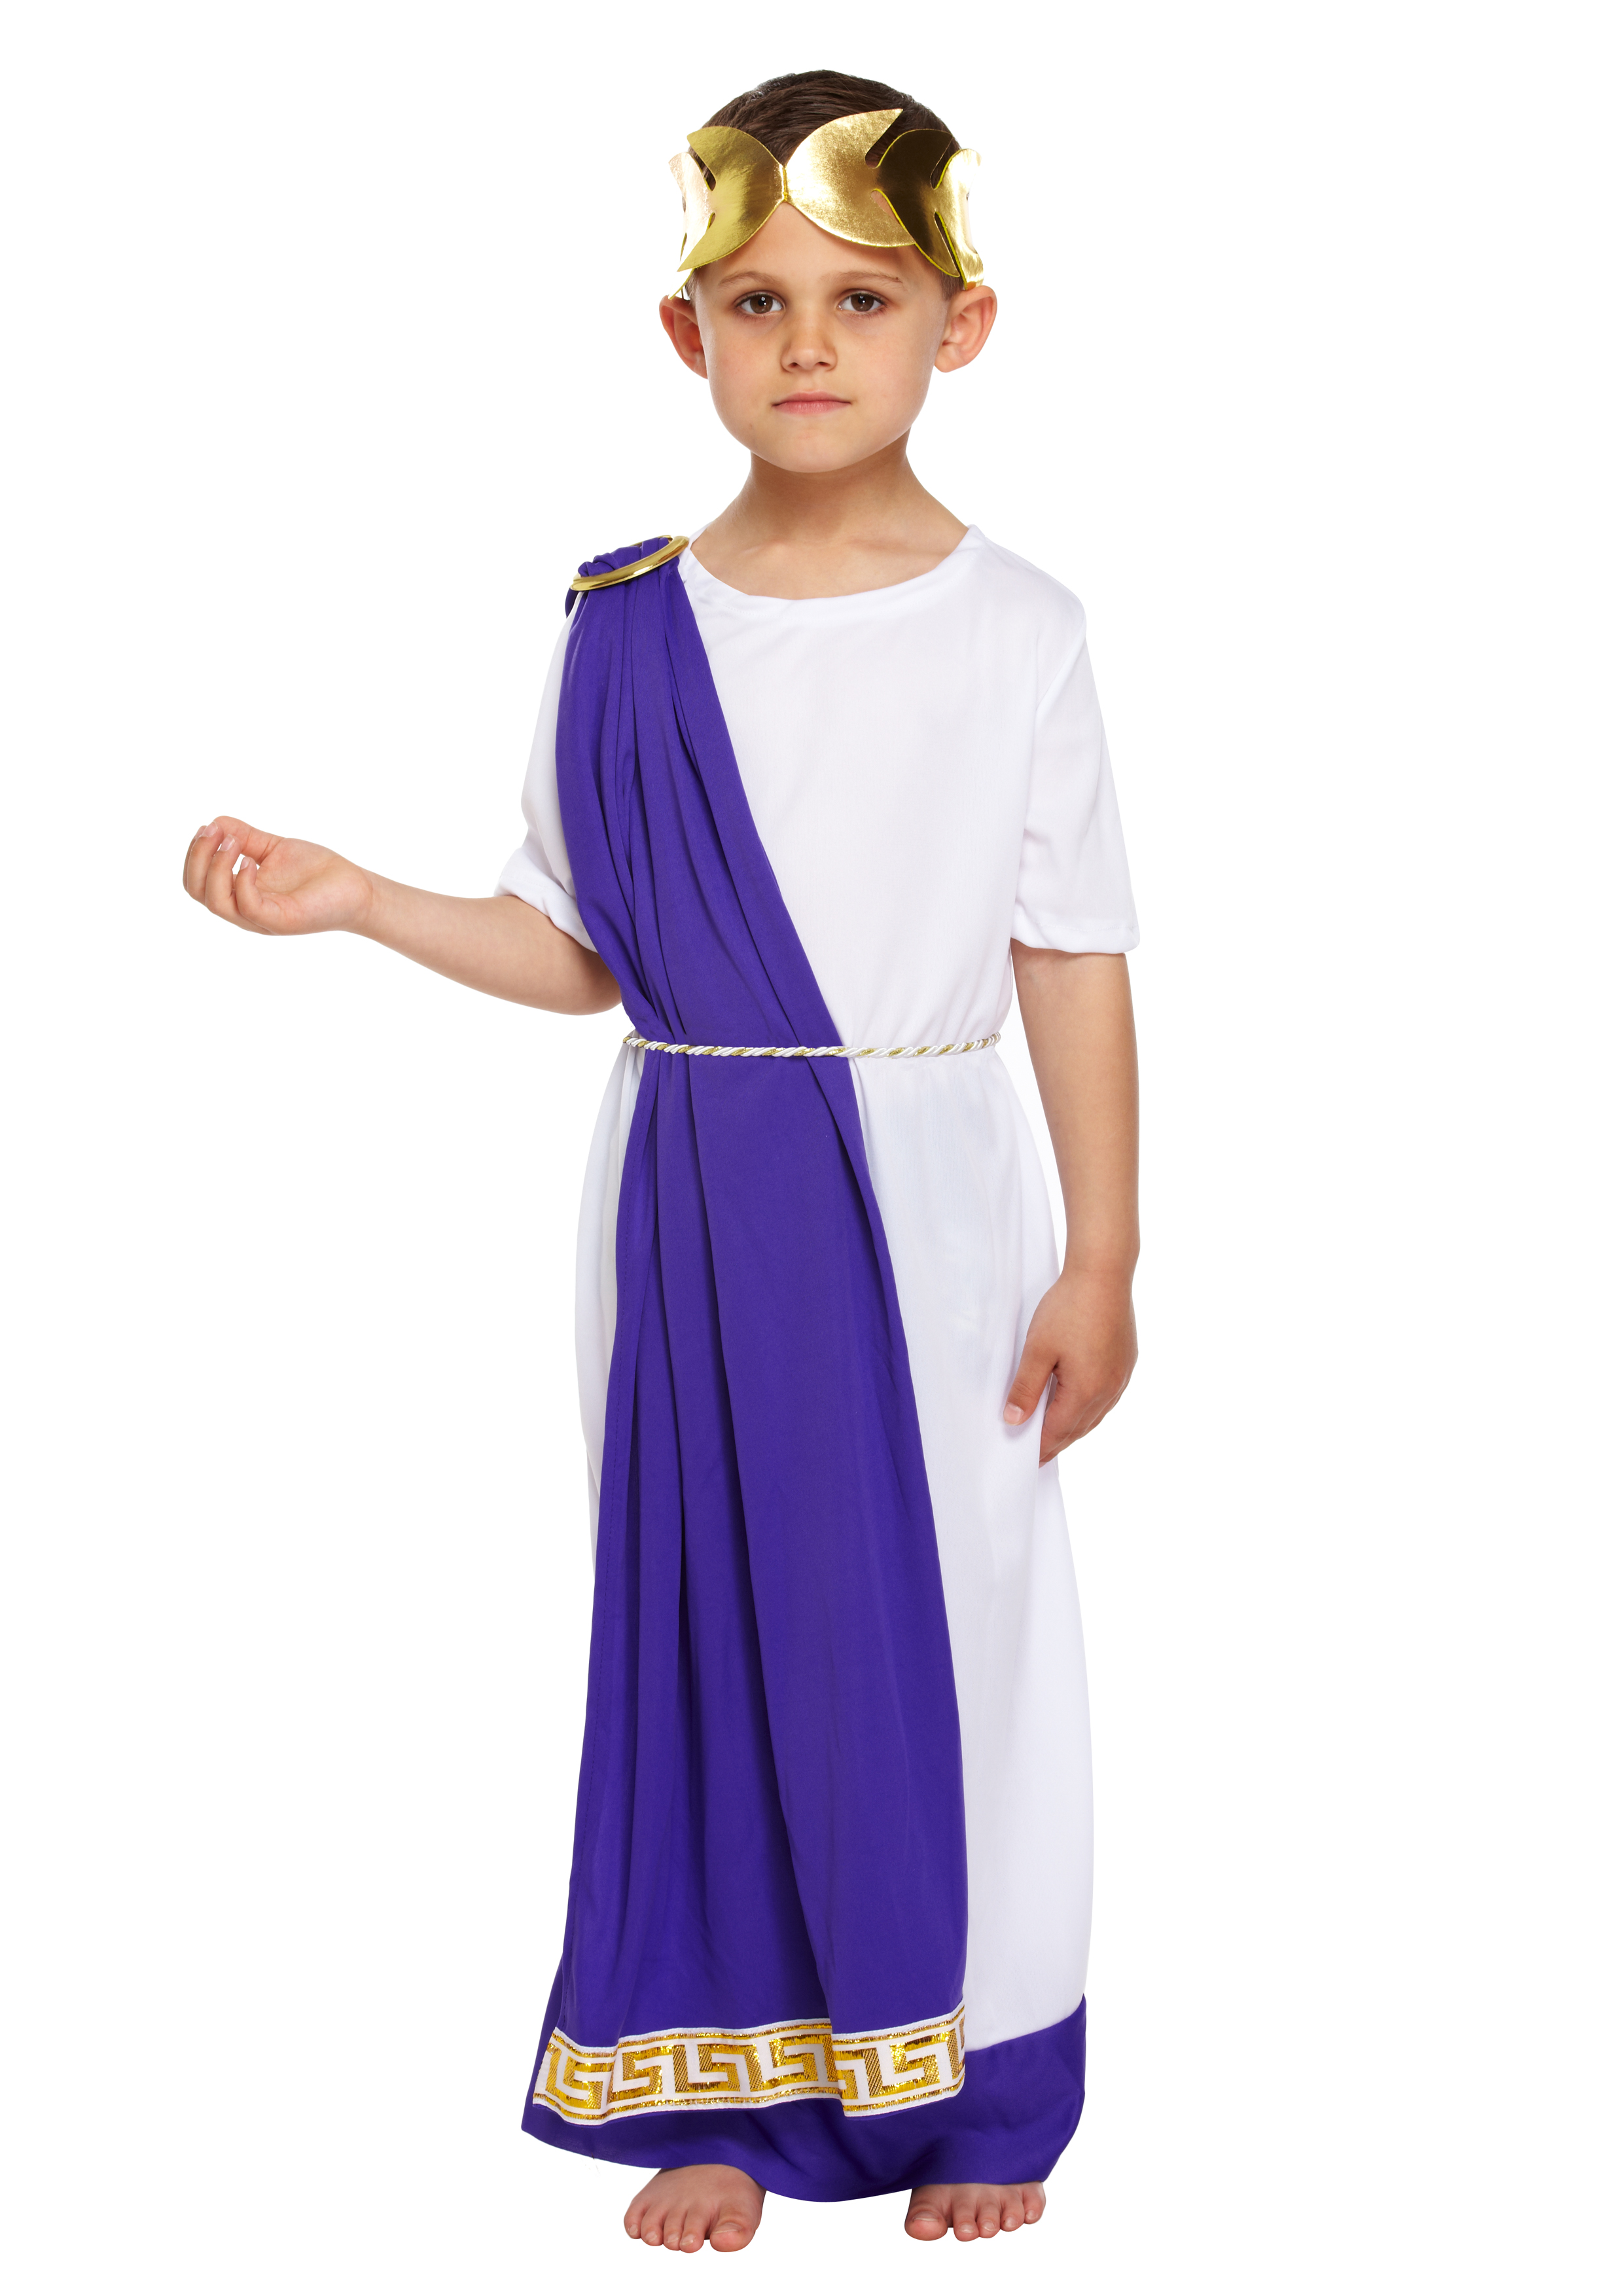 Children's Roman Emperor Costume (Small / 4-6 Years) : Henbrandt Ltd